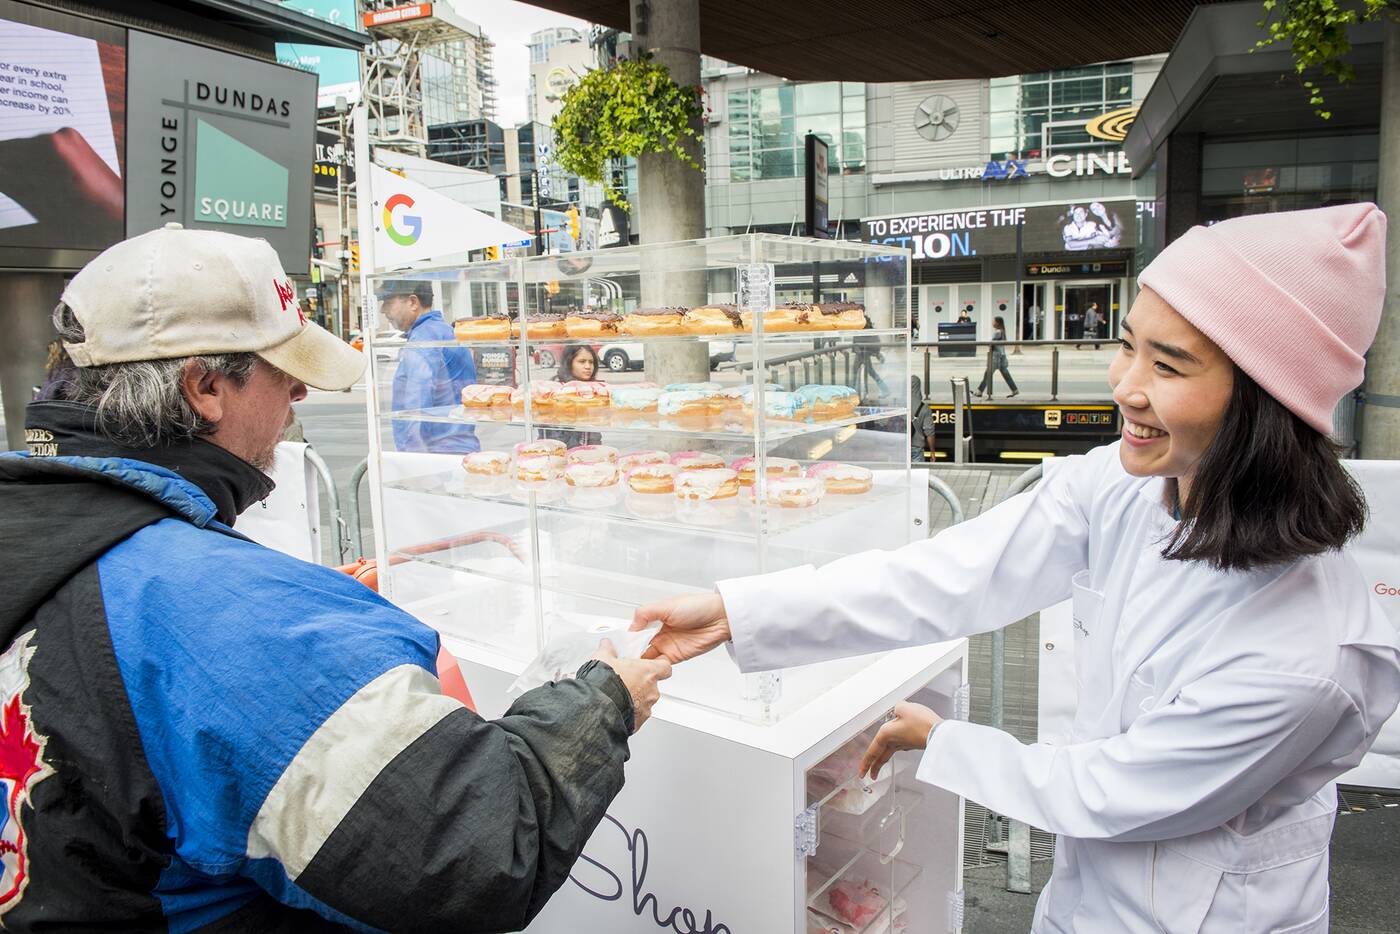 Google Donut shop